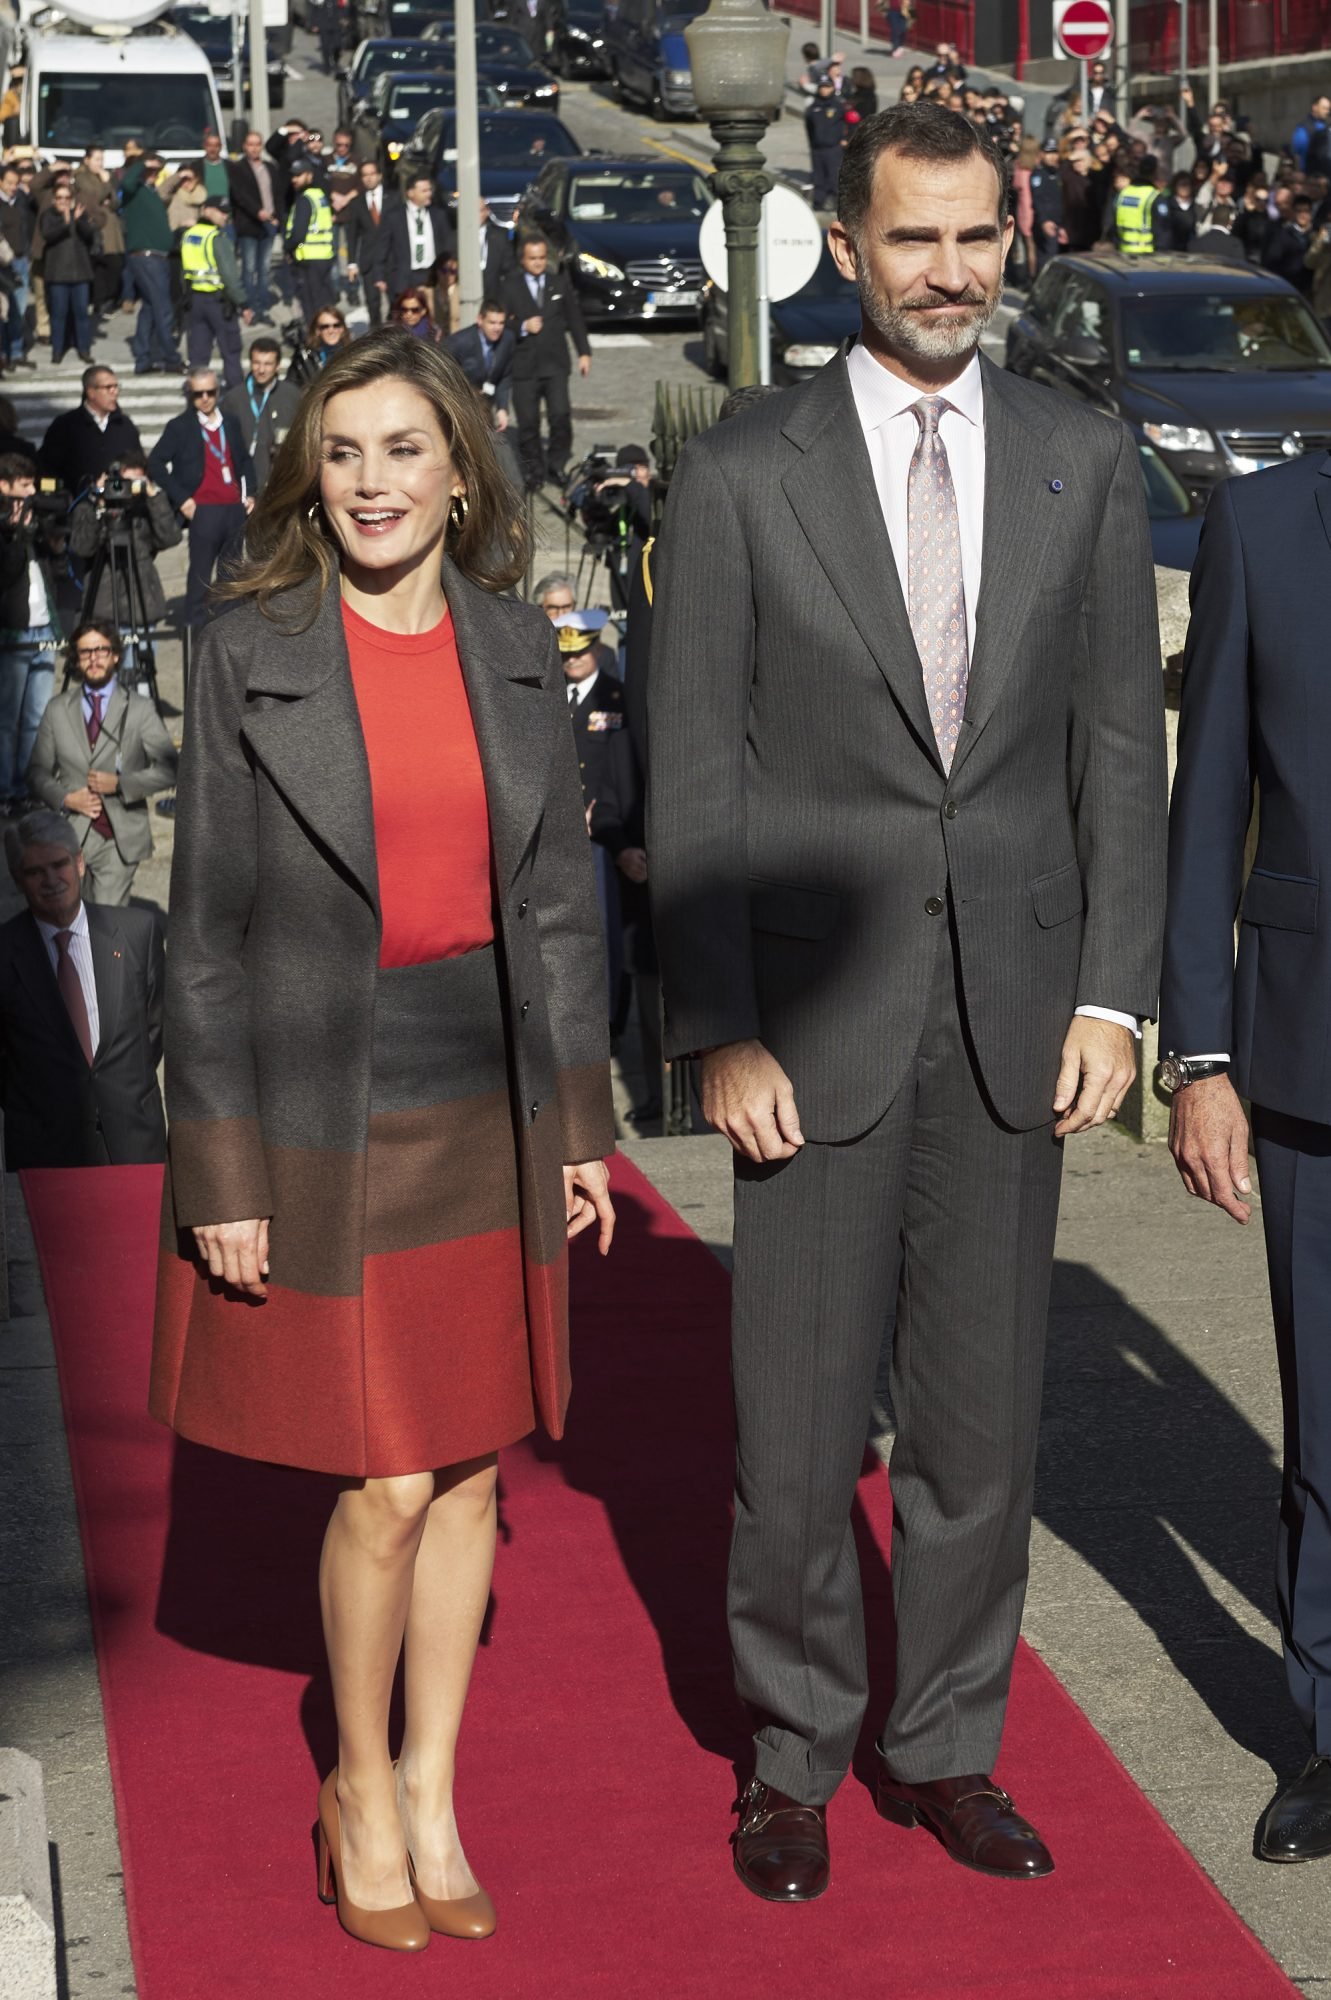 PORTO, PORTUGAL - NOVEMBER 29: King Felipe of Spain and Queen Letizia of Spain visit the Palacio de la Bolsa during their official visit to Portugal on November 29, 2016 in Porto, Portugal. (Photo by Carlos Alvarez/Getty Images)